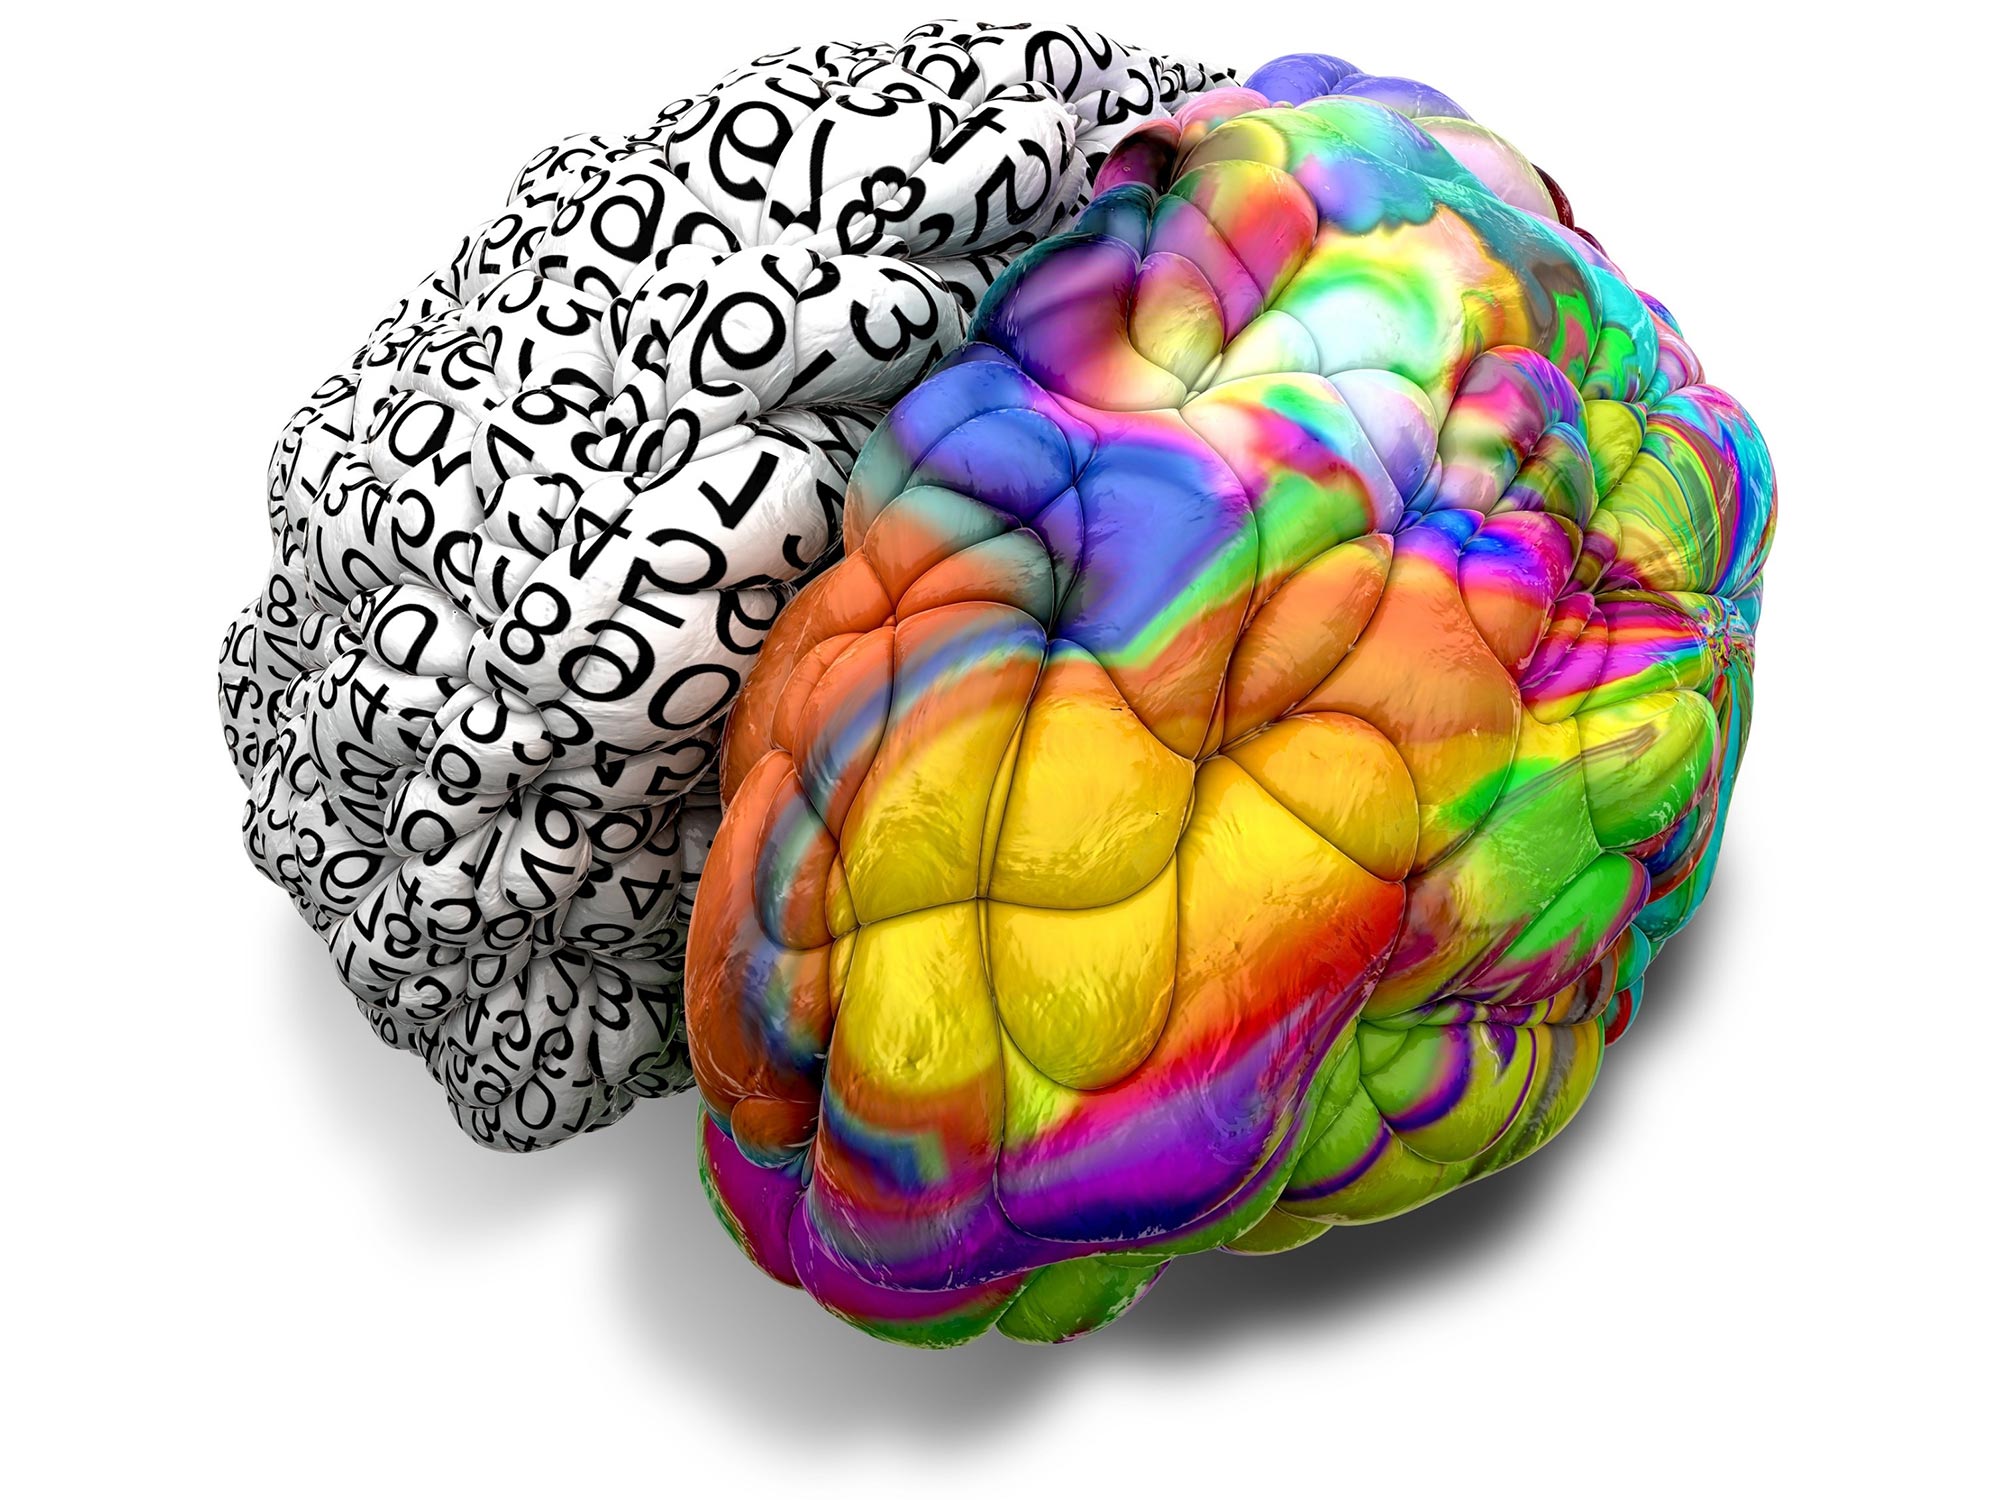 Картинка полушарие мозга. Полушария мозга. 2 Полушария мозга. Левое и правое полушарие мозга. Разноцветный мозг.